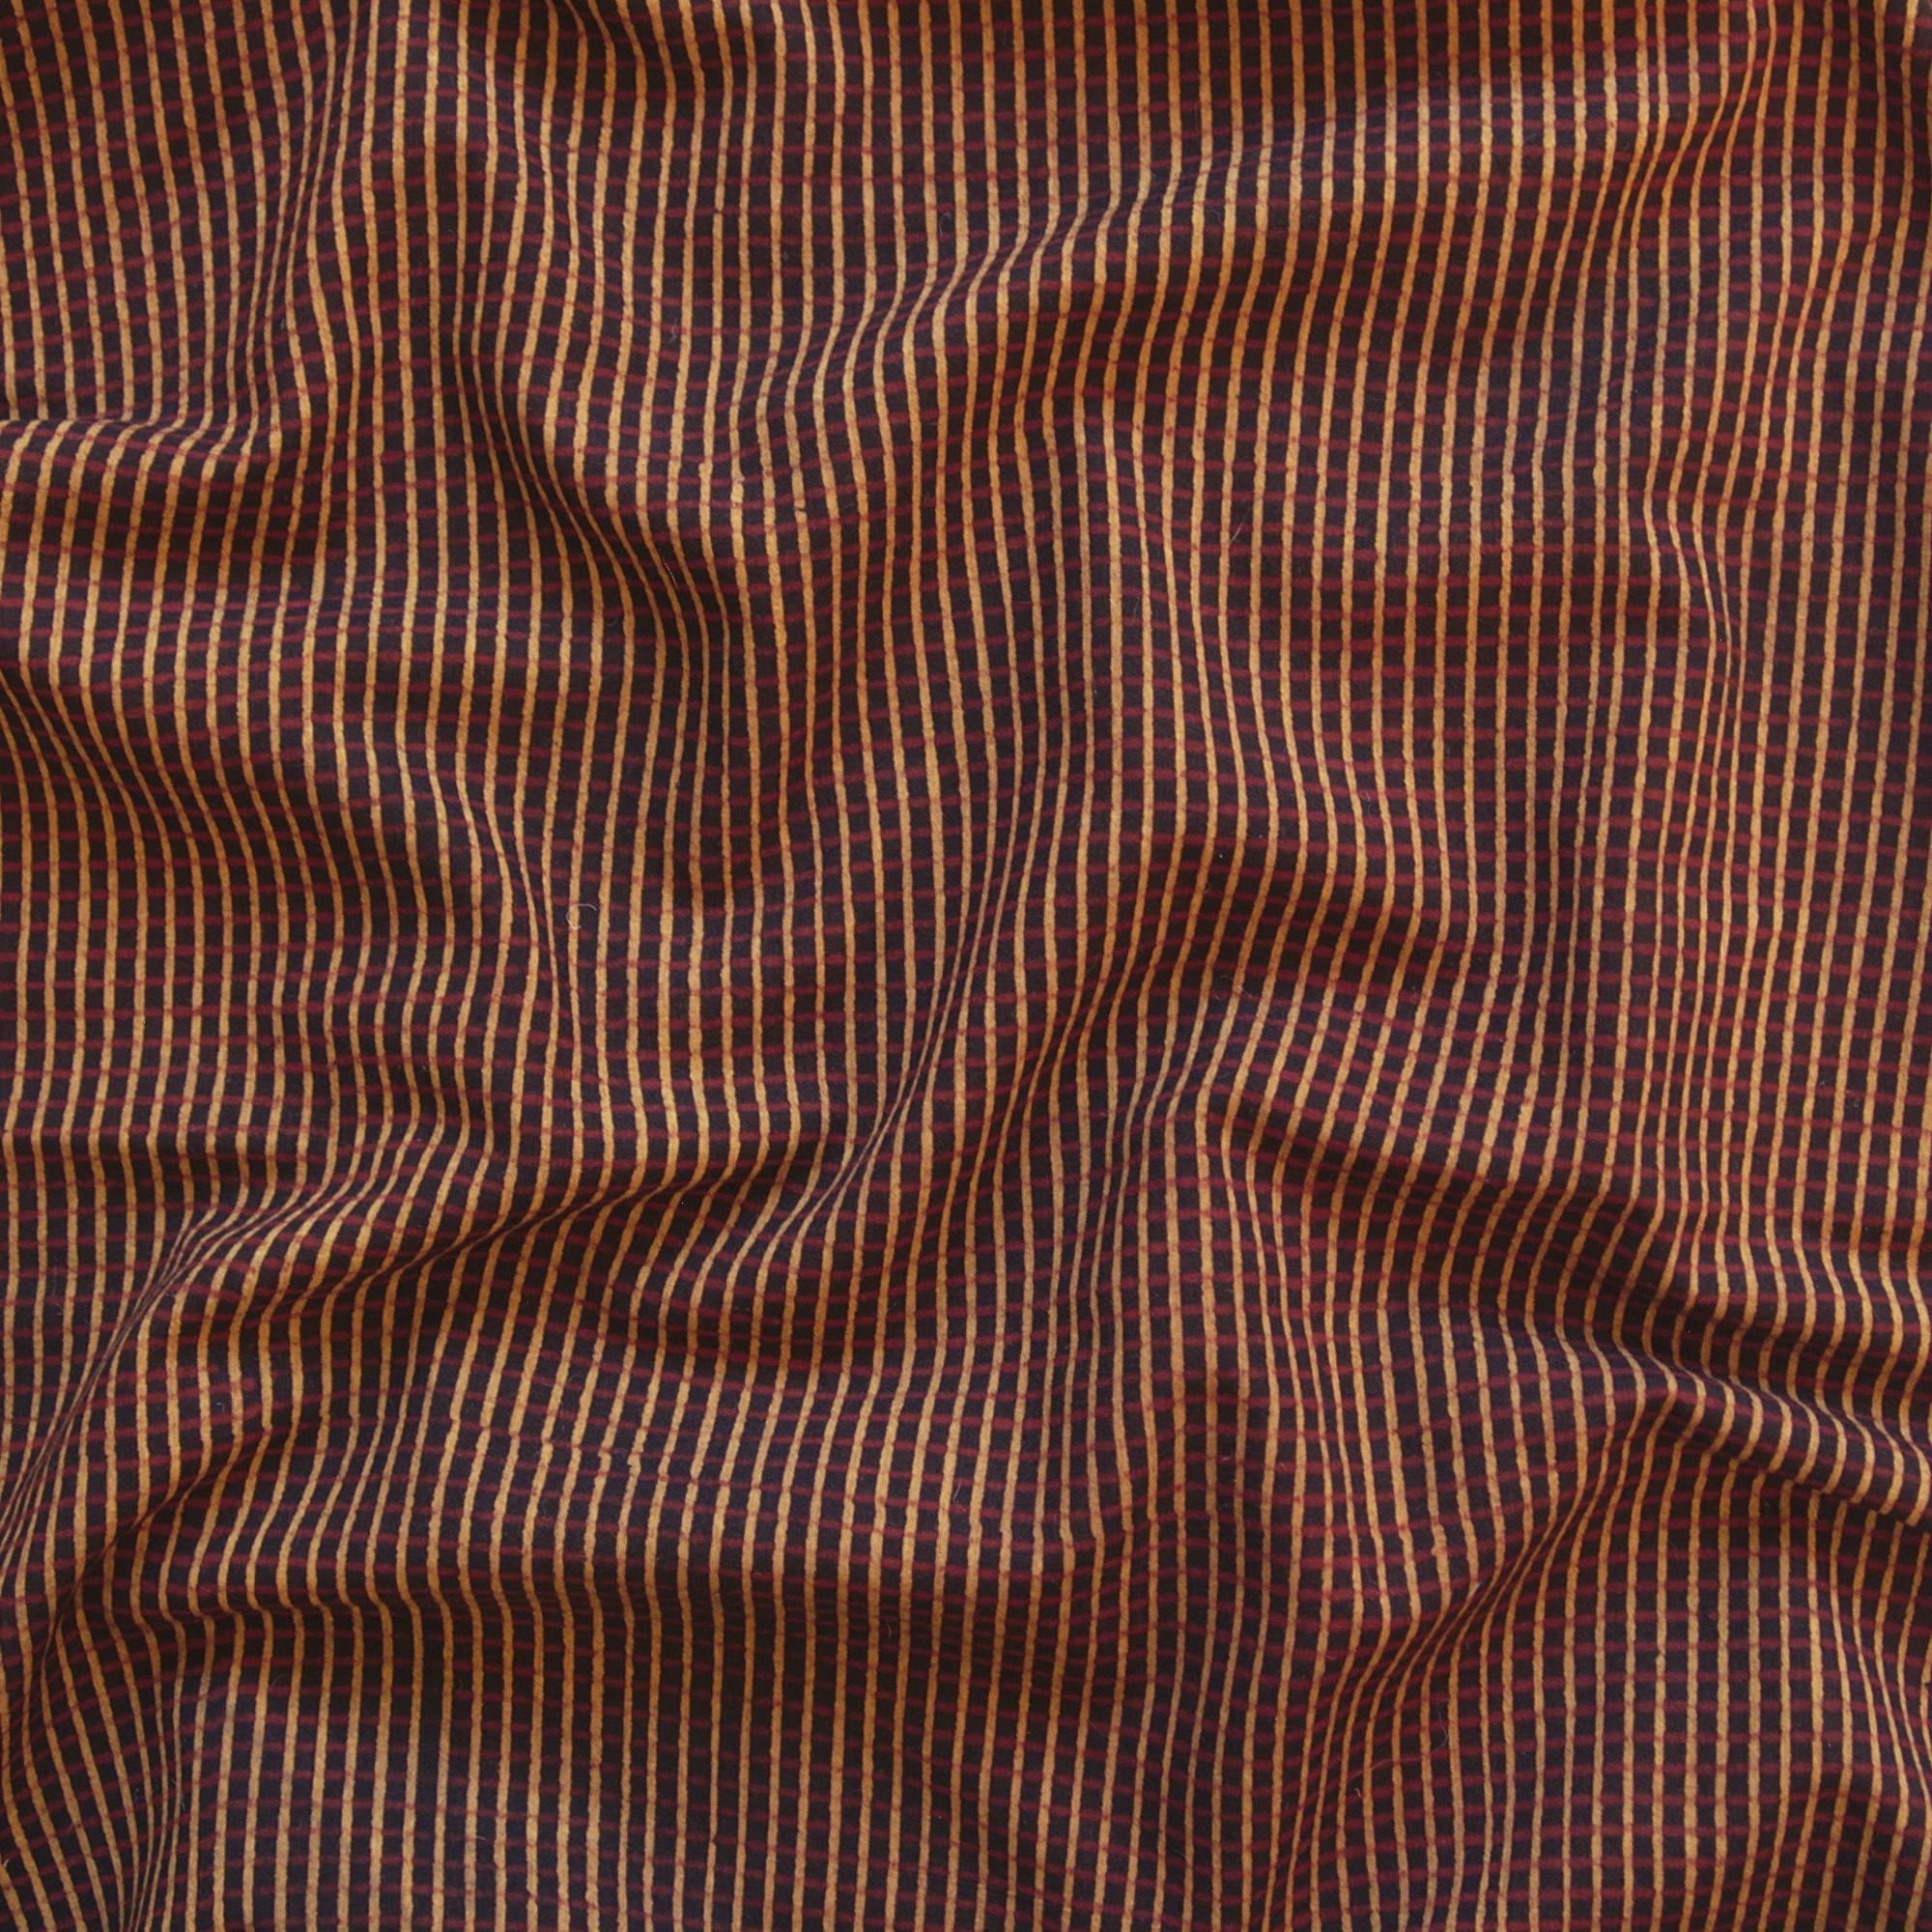 Block Printed Fabric, 100% Cotton, Ajrak Design: Black Base, Ochre Columns, Red Rows. Contrast